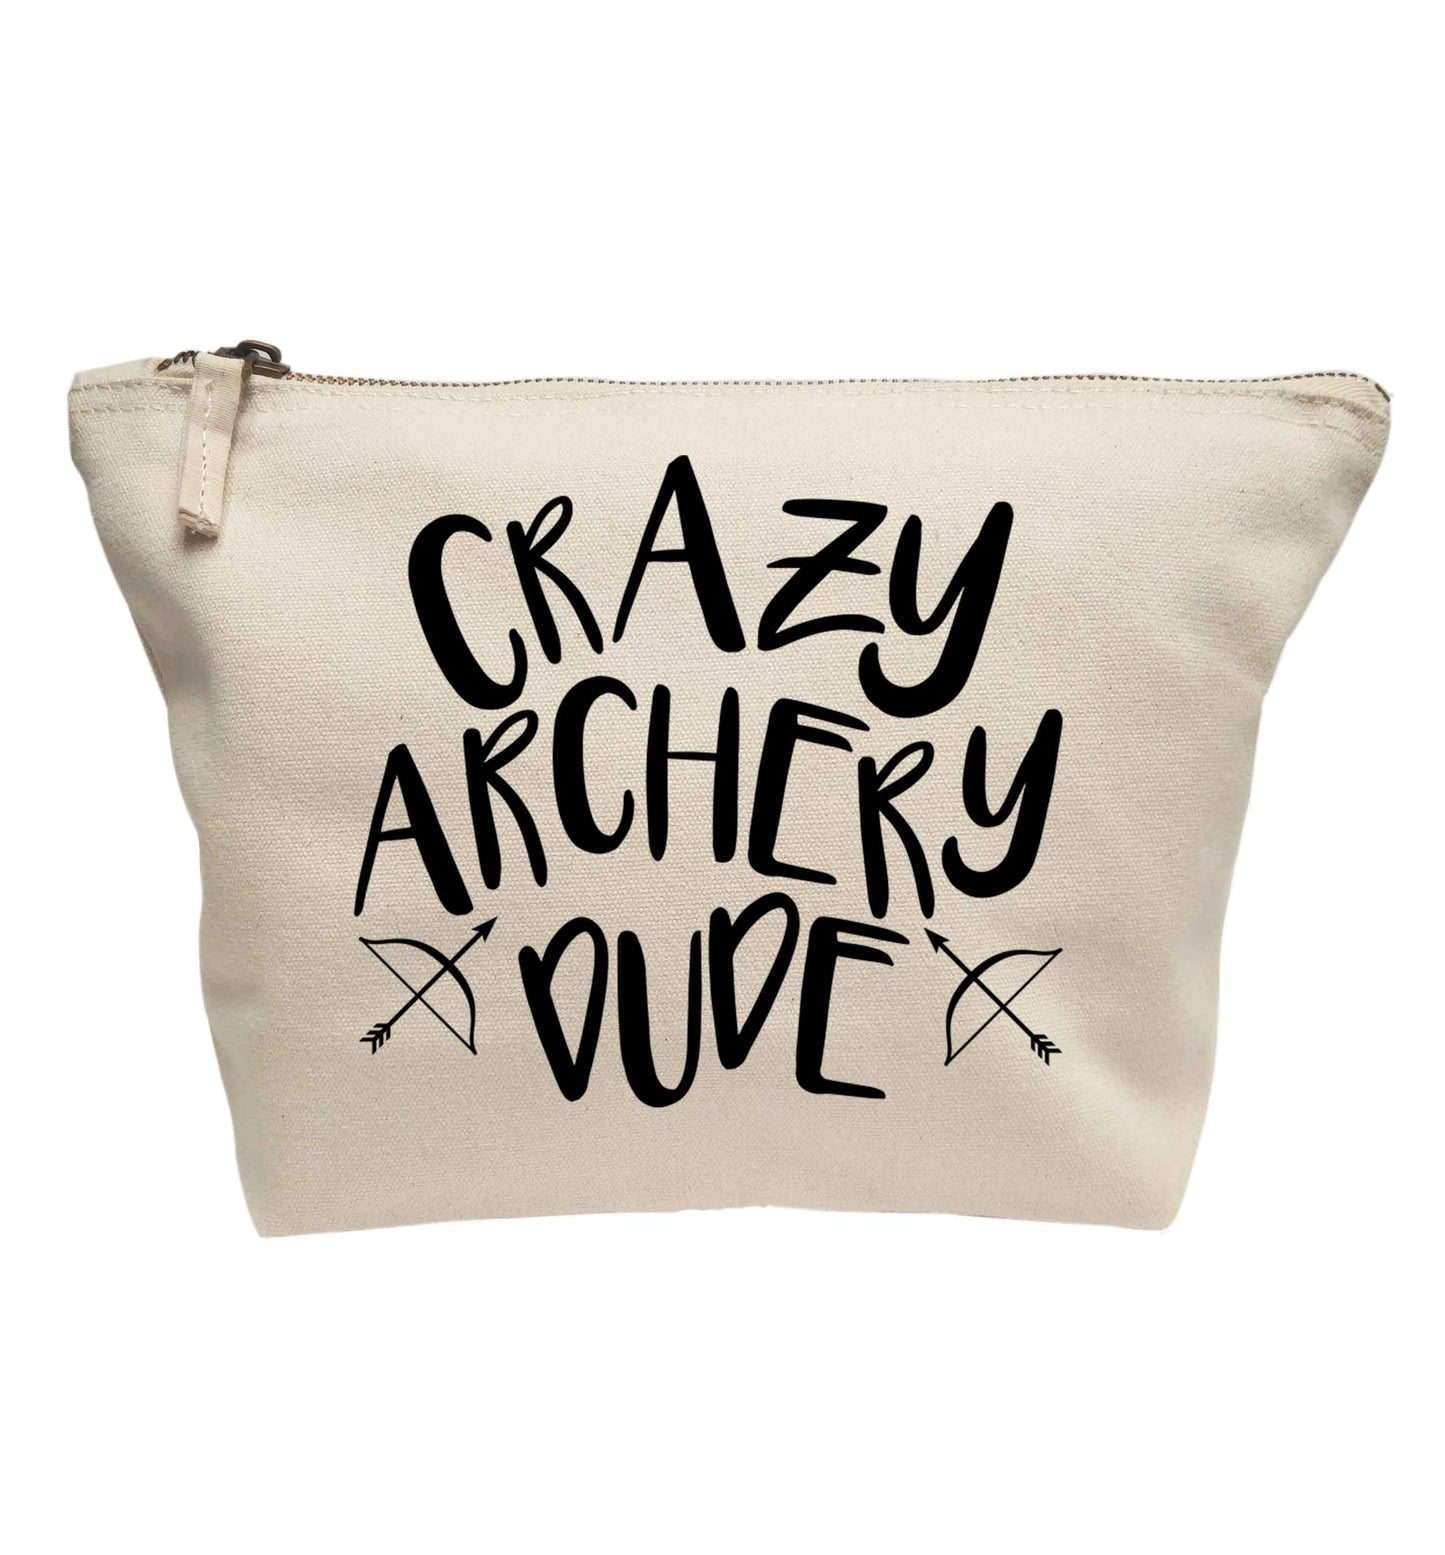 Crazy archery dude | makeup / wash bag